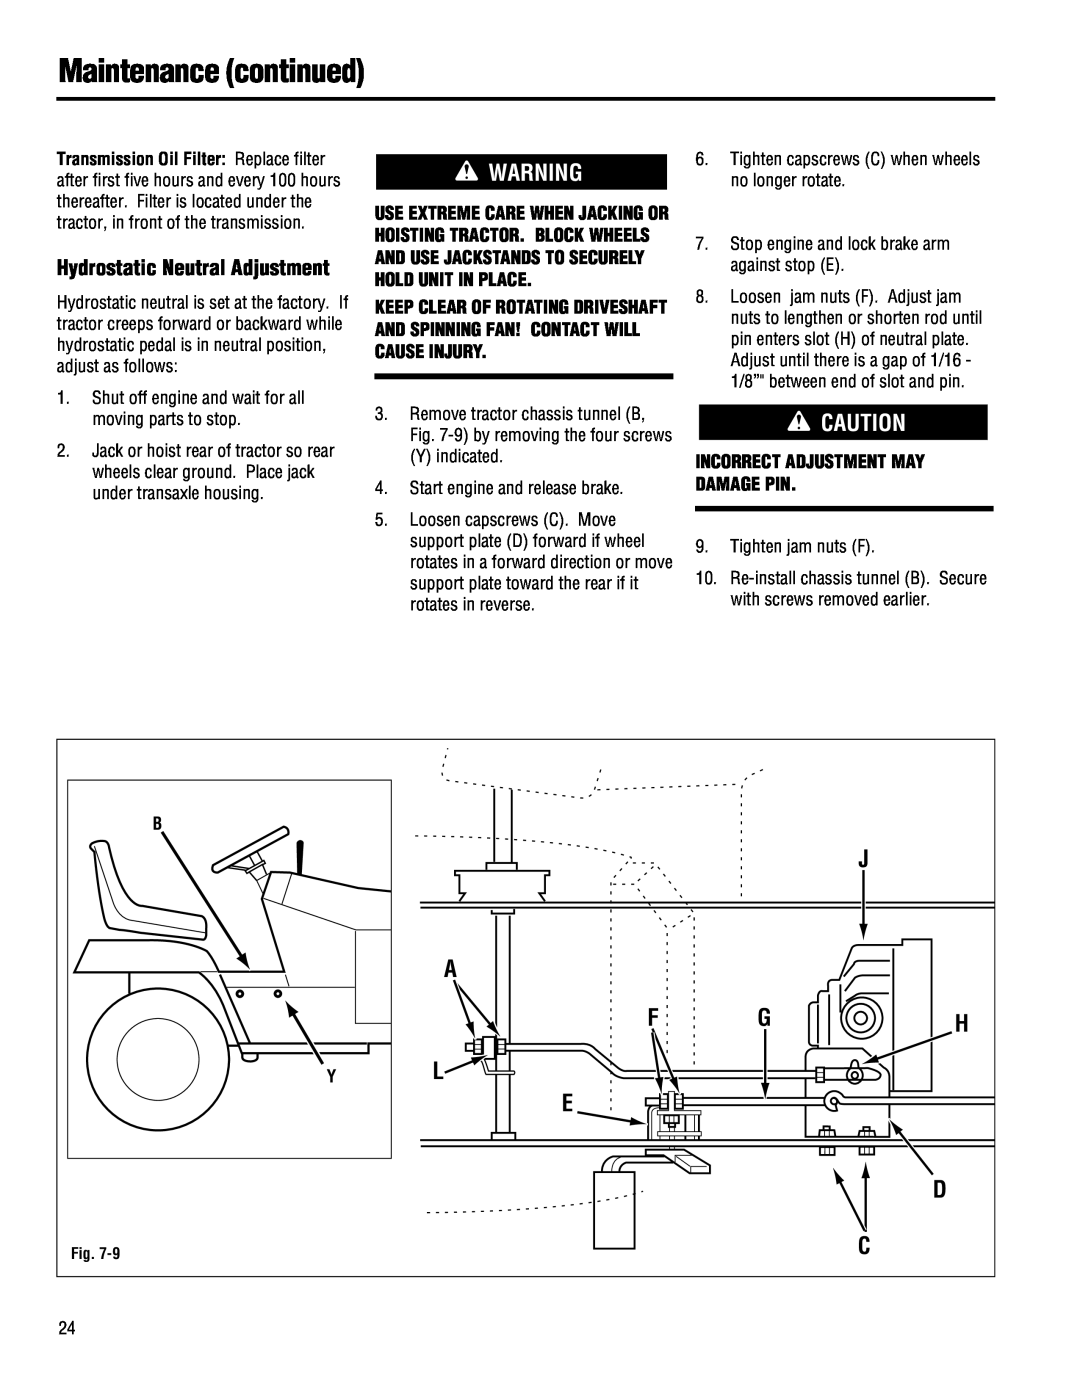 Troy-Bilt 13101-GTX 16 manual Hydrostatic Neutral Adjustment, Incorrect Adjustment May Damage Pin, Maintenance continued 